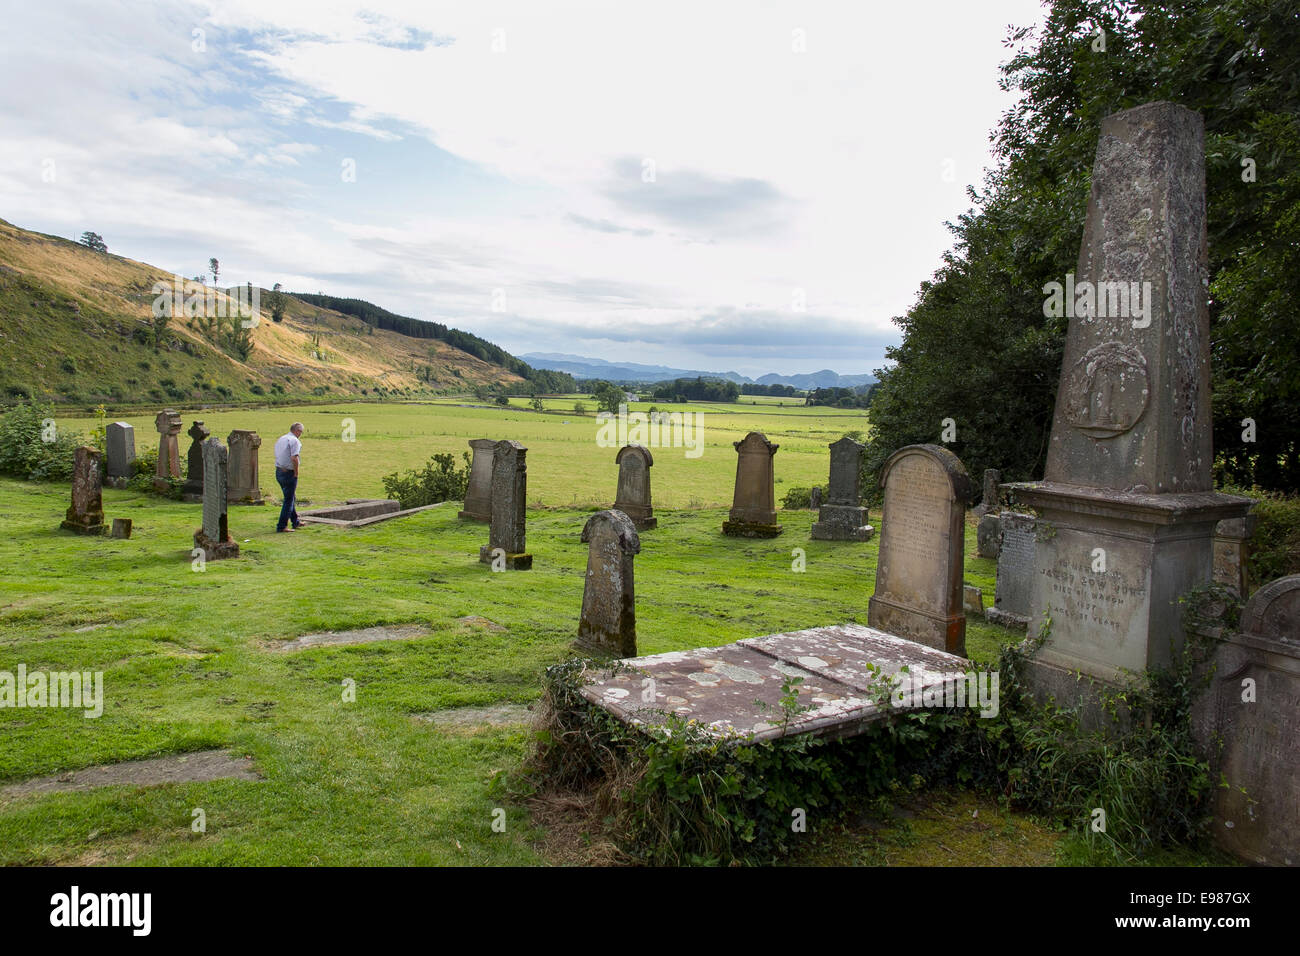 The graveyard of Kilmartin church, overlooking Kilmartin Glen, Argyll and Bute Scotland. Stock Photo